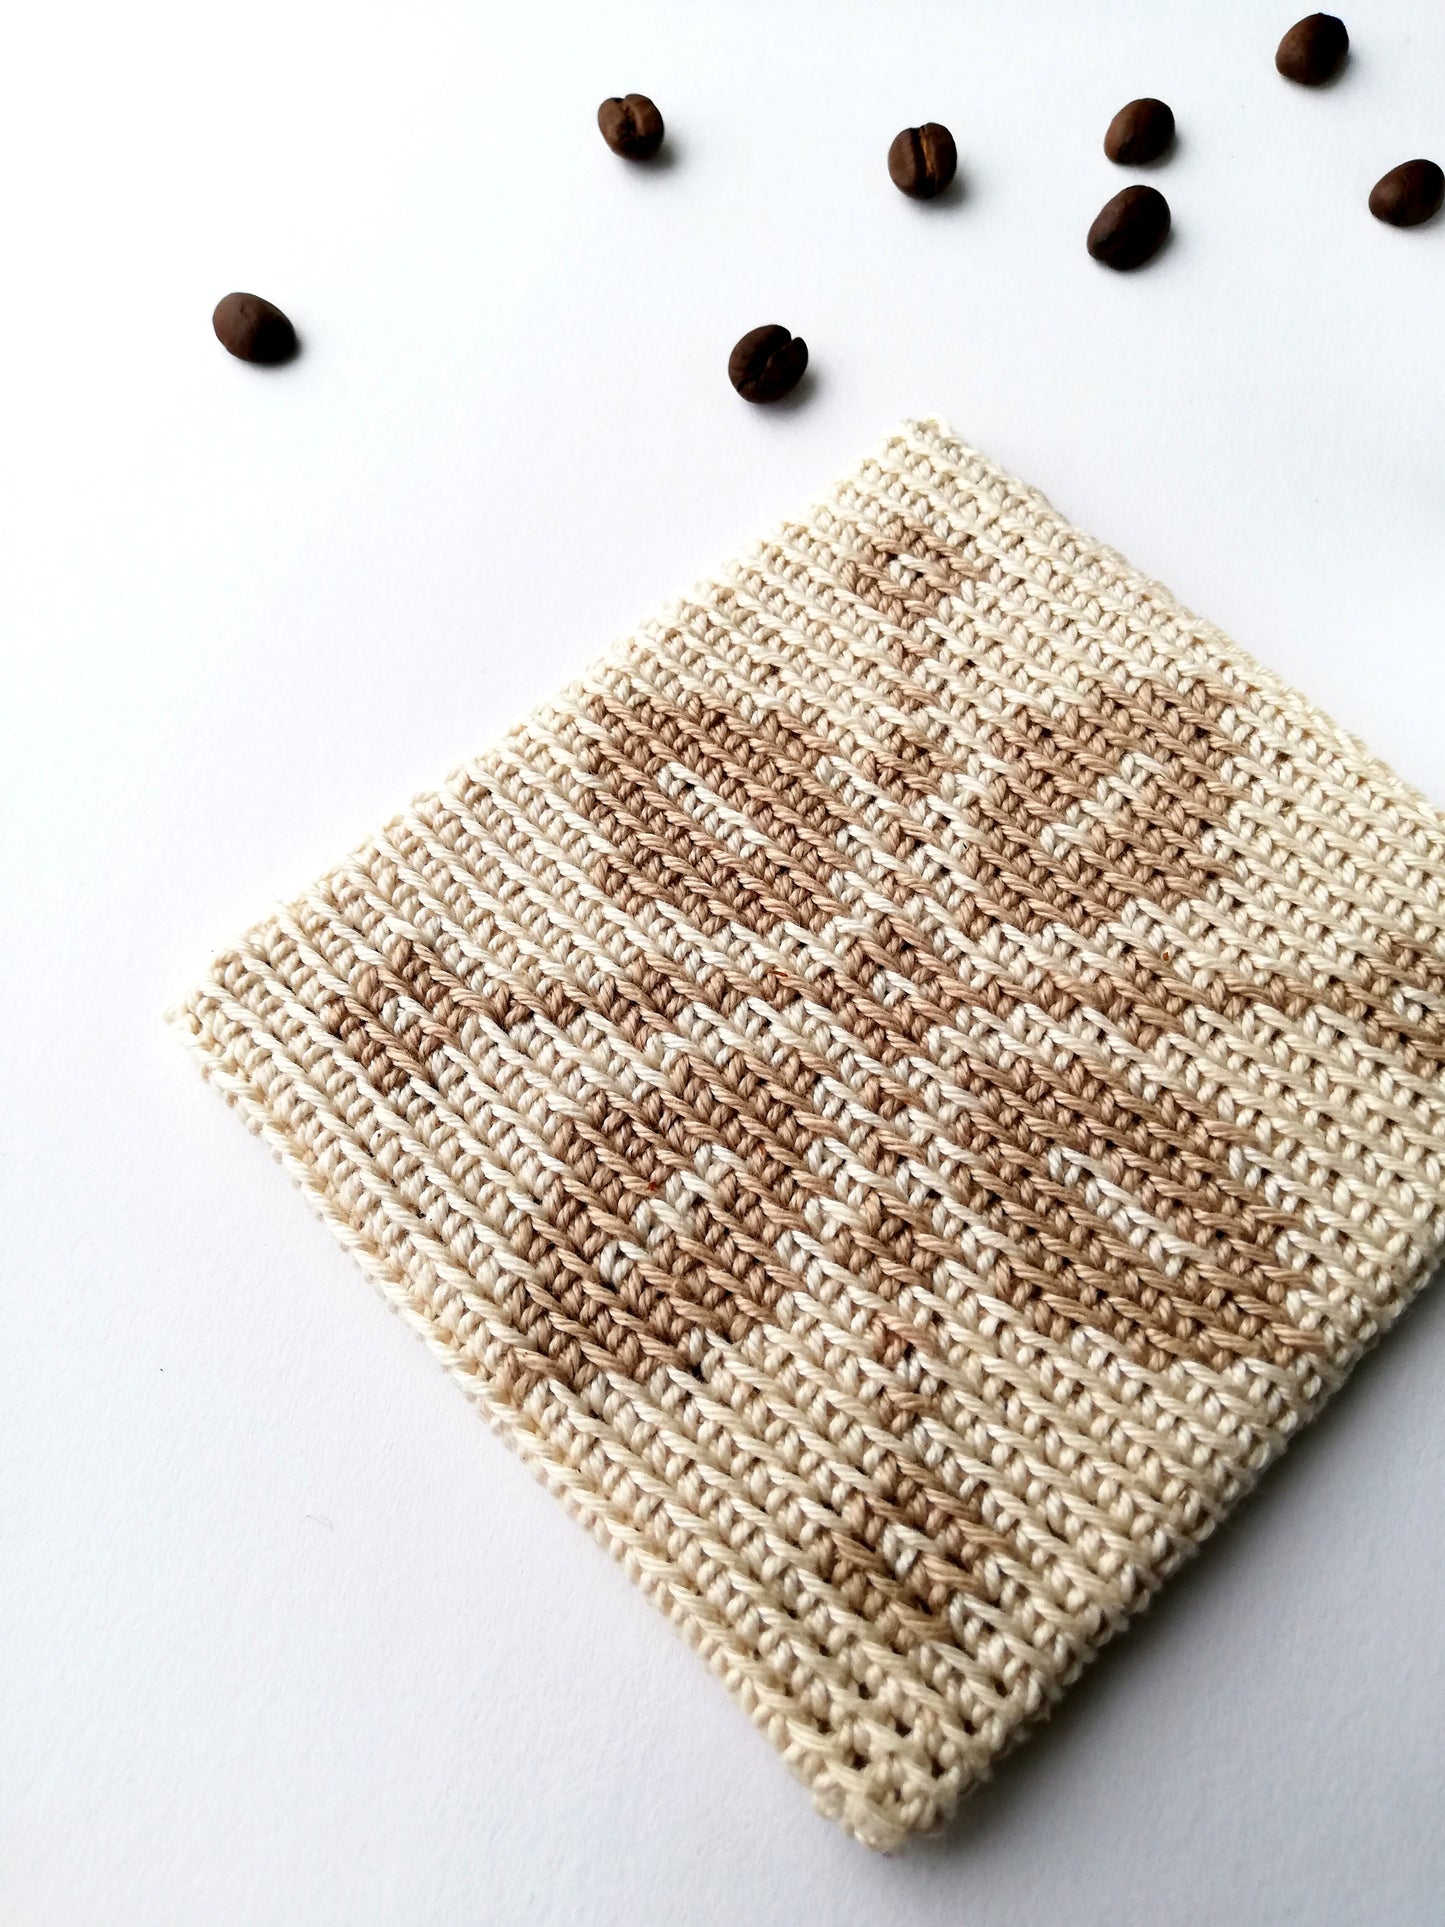 Tapestry crochet coaster